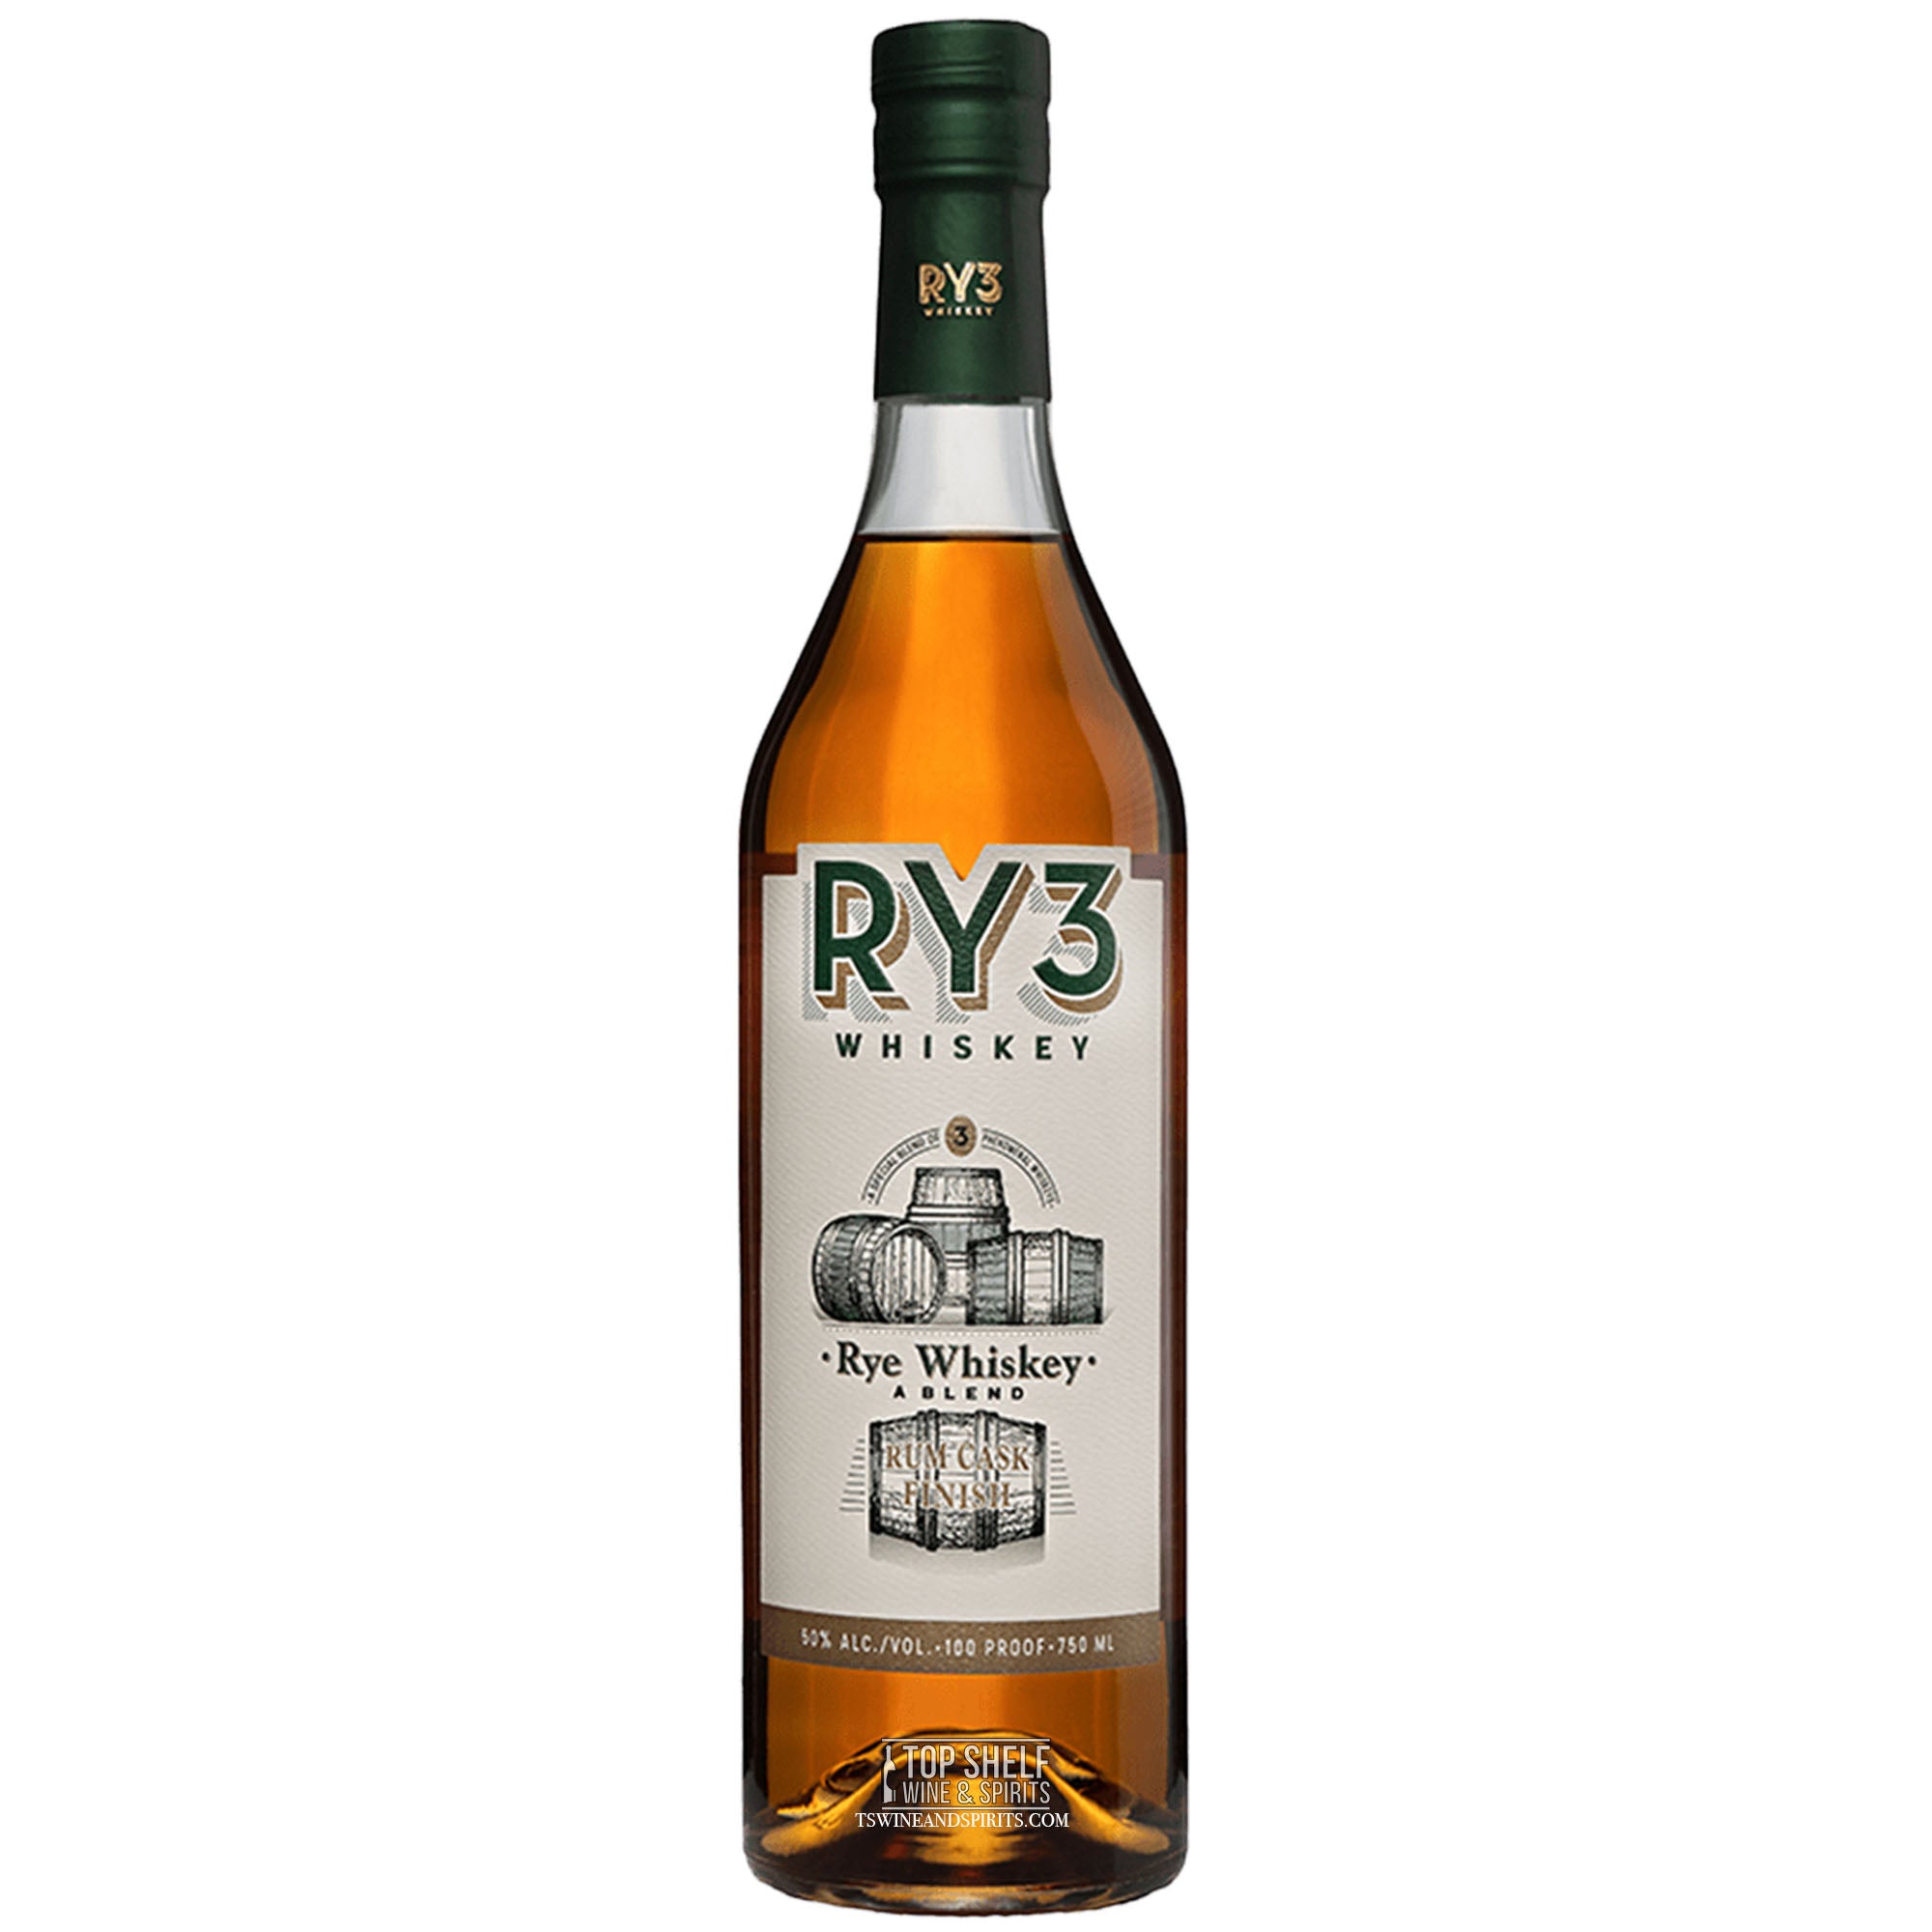 RY3 Rye Whiskey Rum Cask Finish